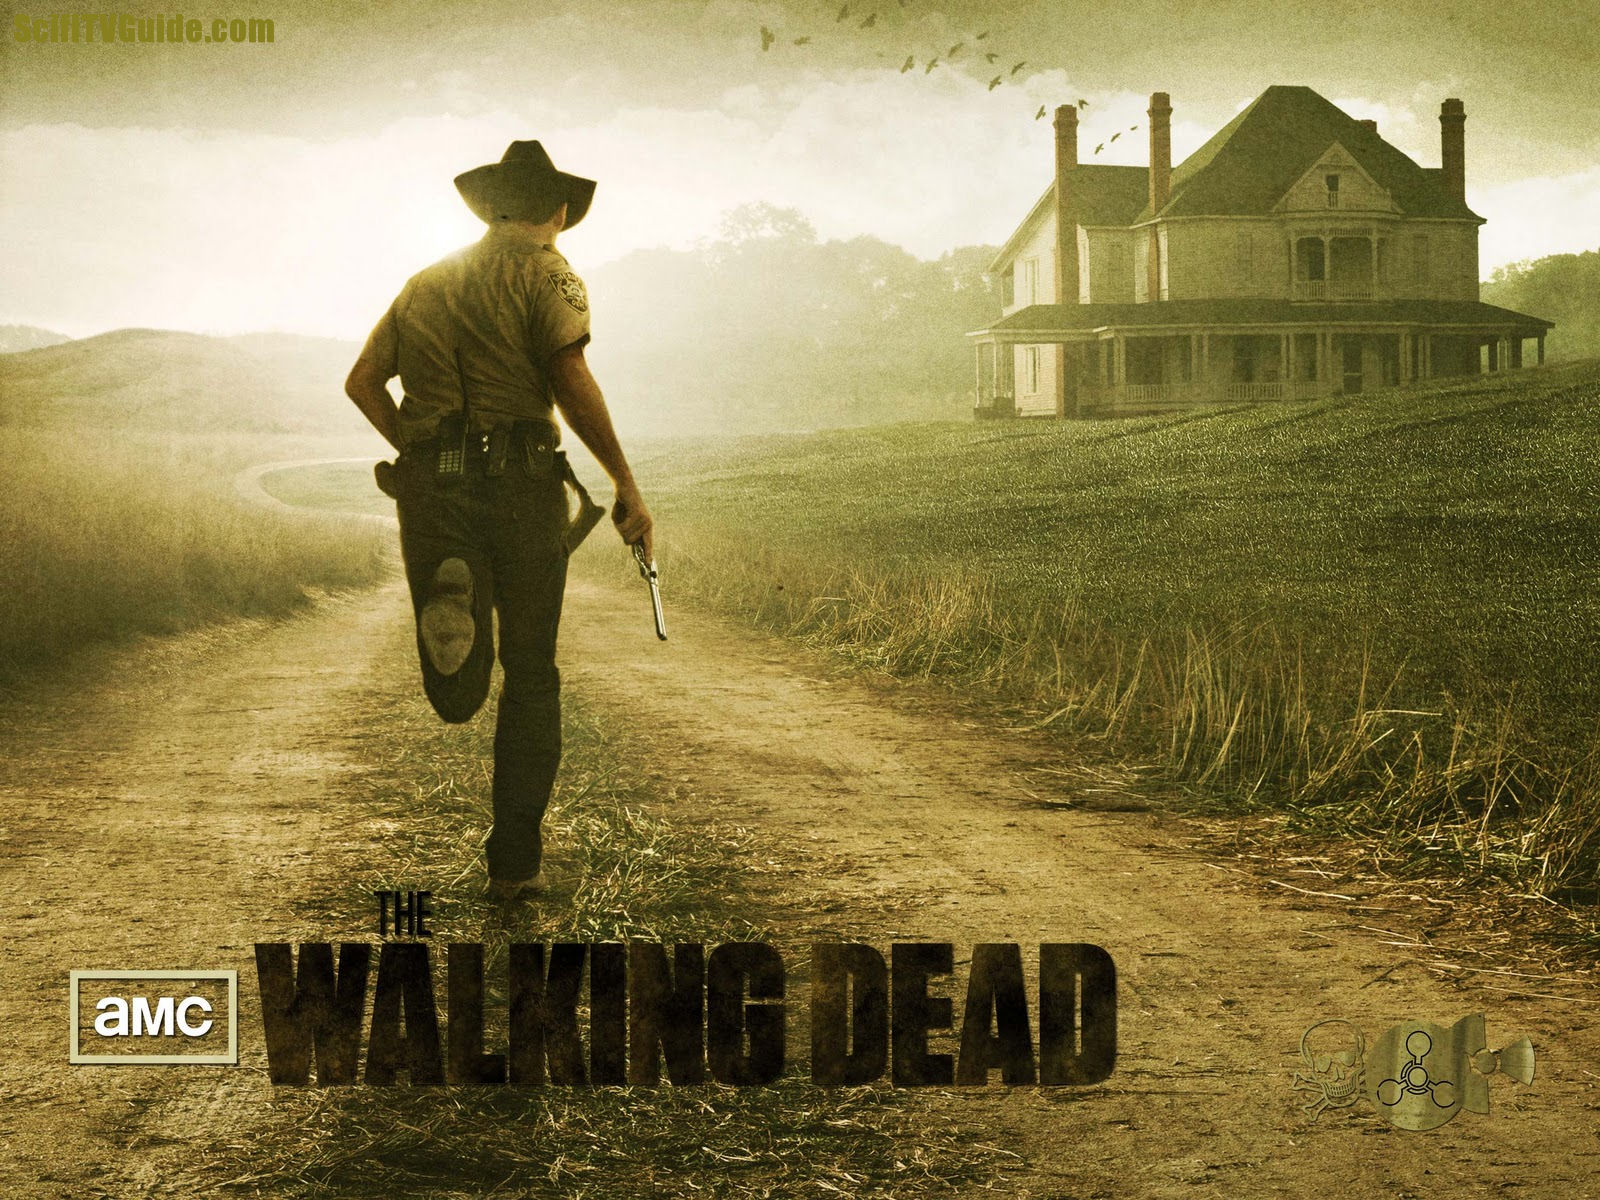 Full HD The Walking Dead Wallpaper | Full HD Pictures